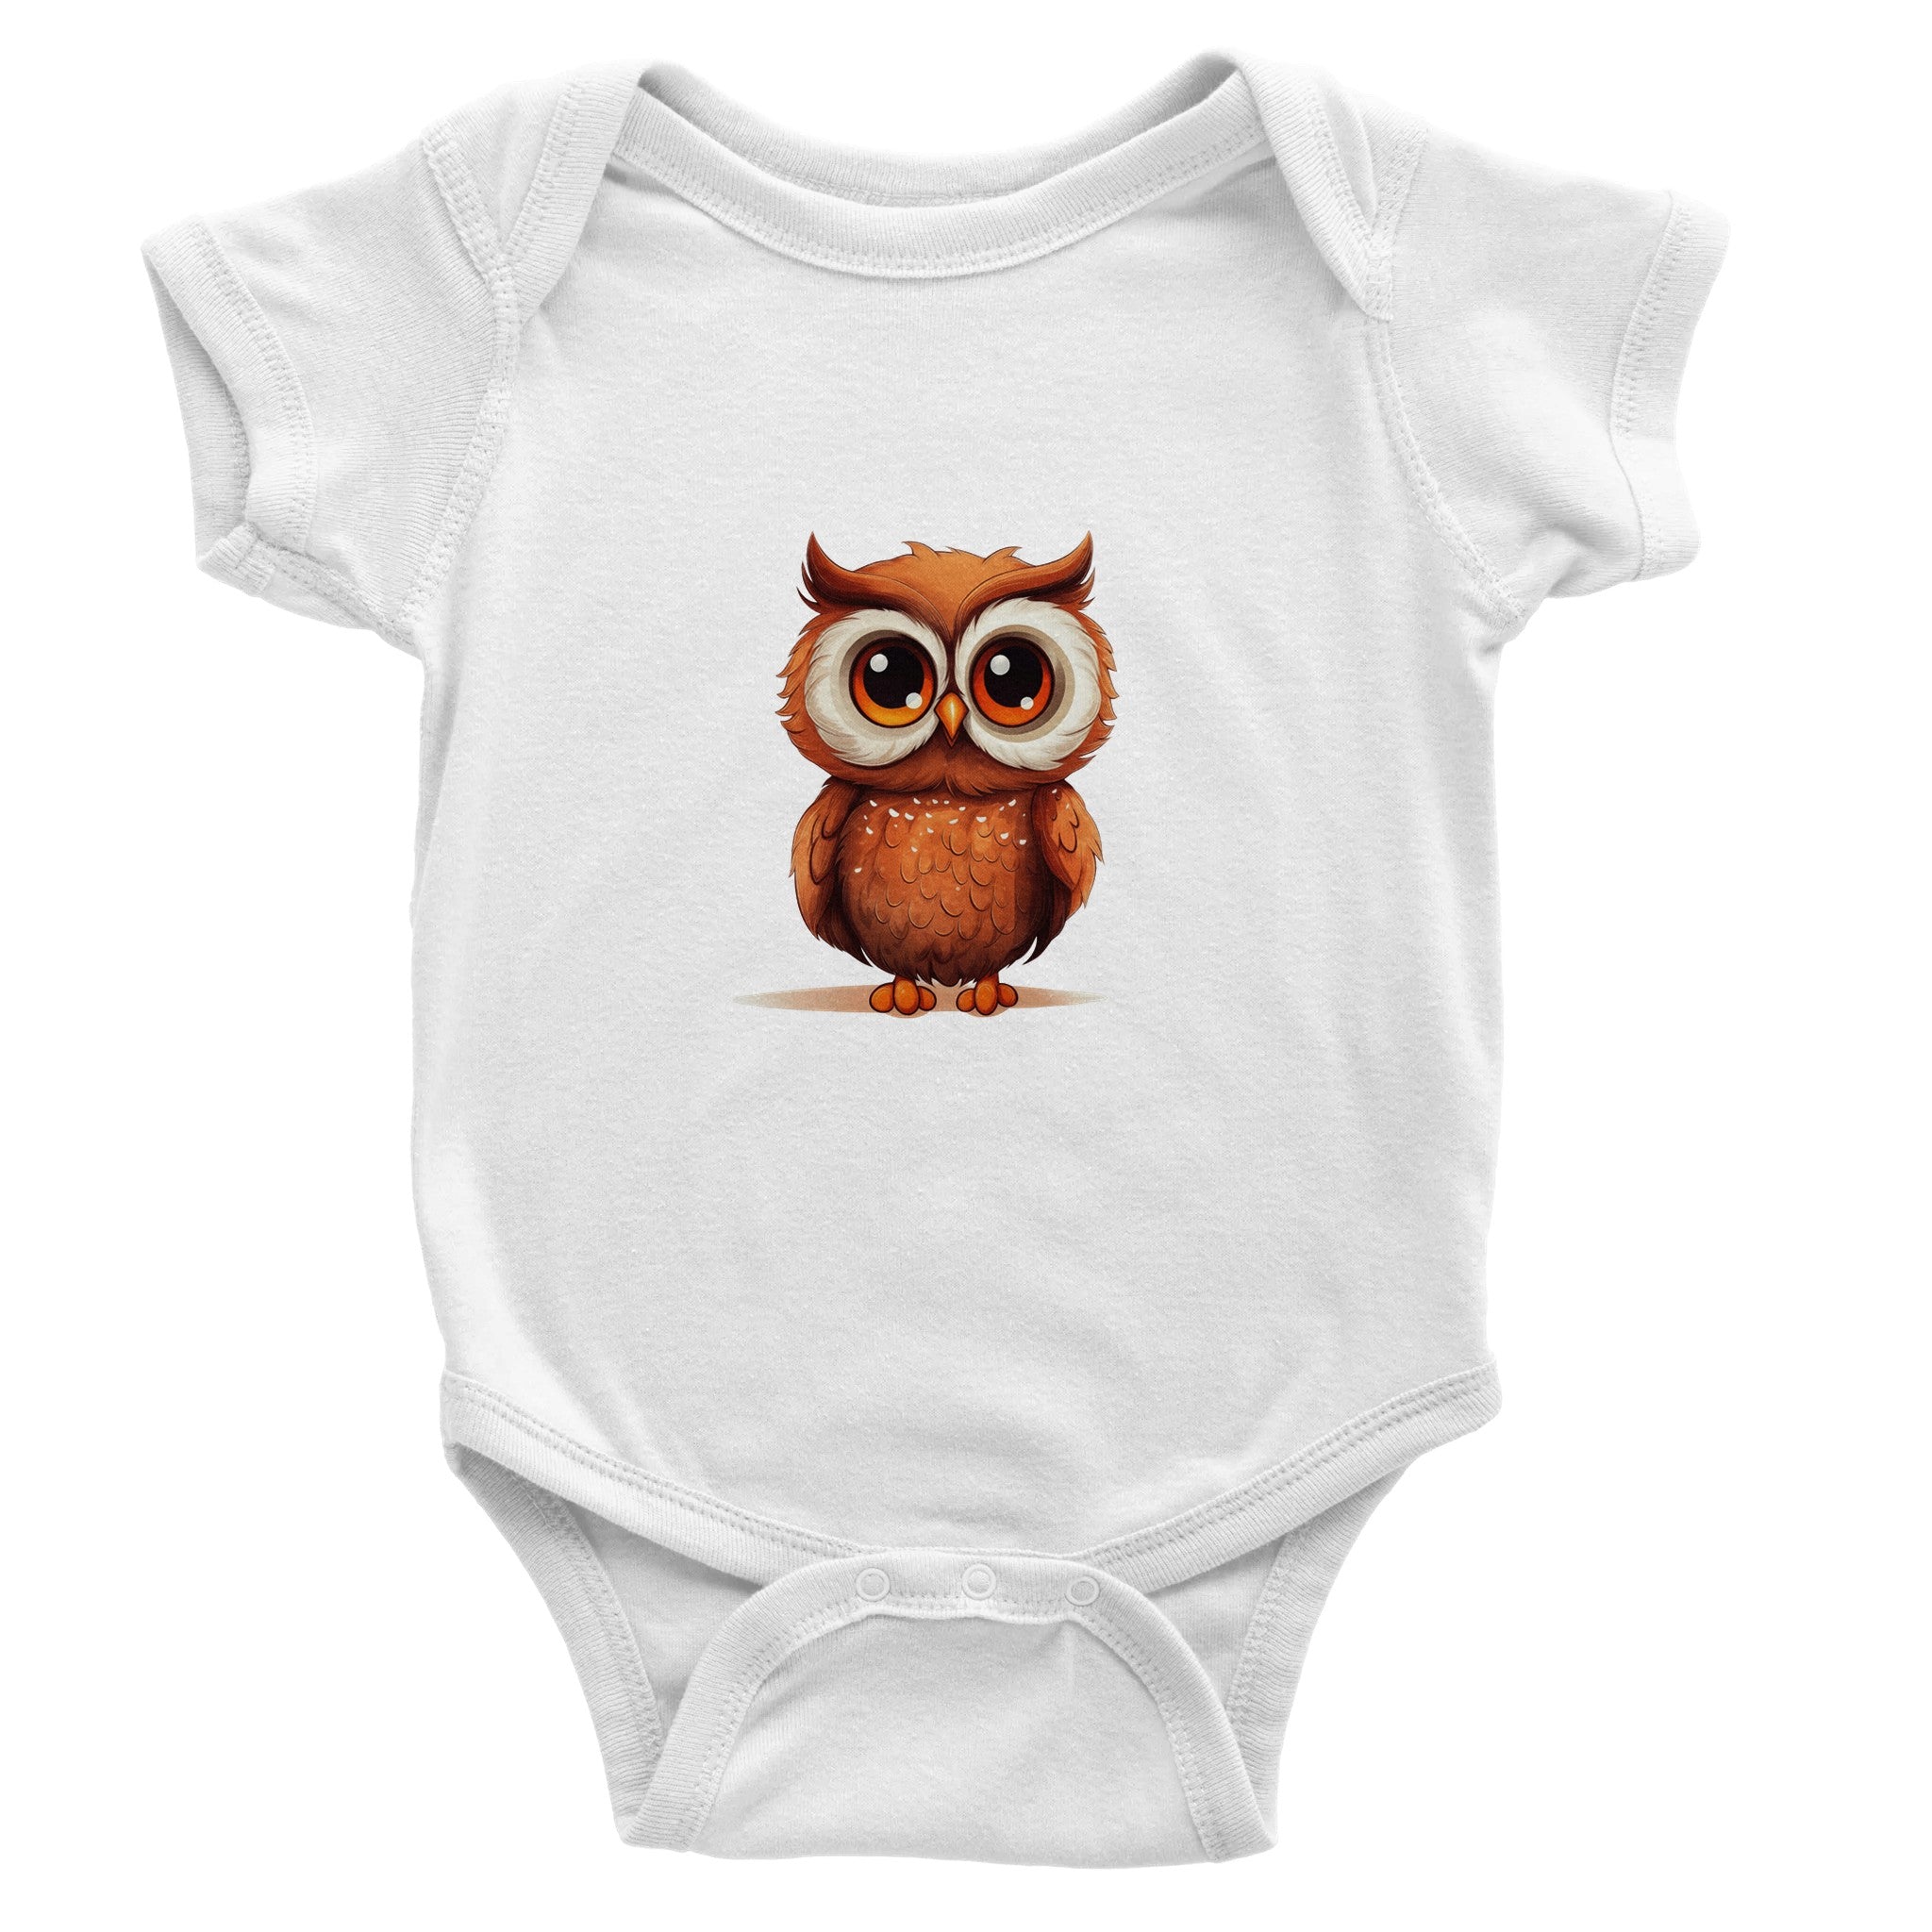 Cuddly Wisdom Watcher Baby Short Sleeve Bodysuit - Optimalprint